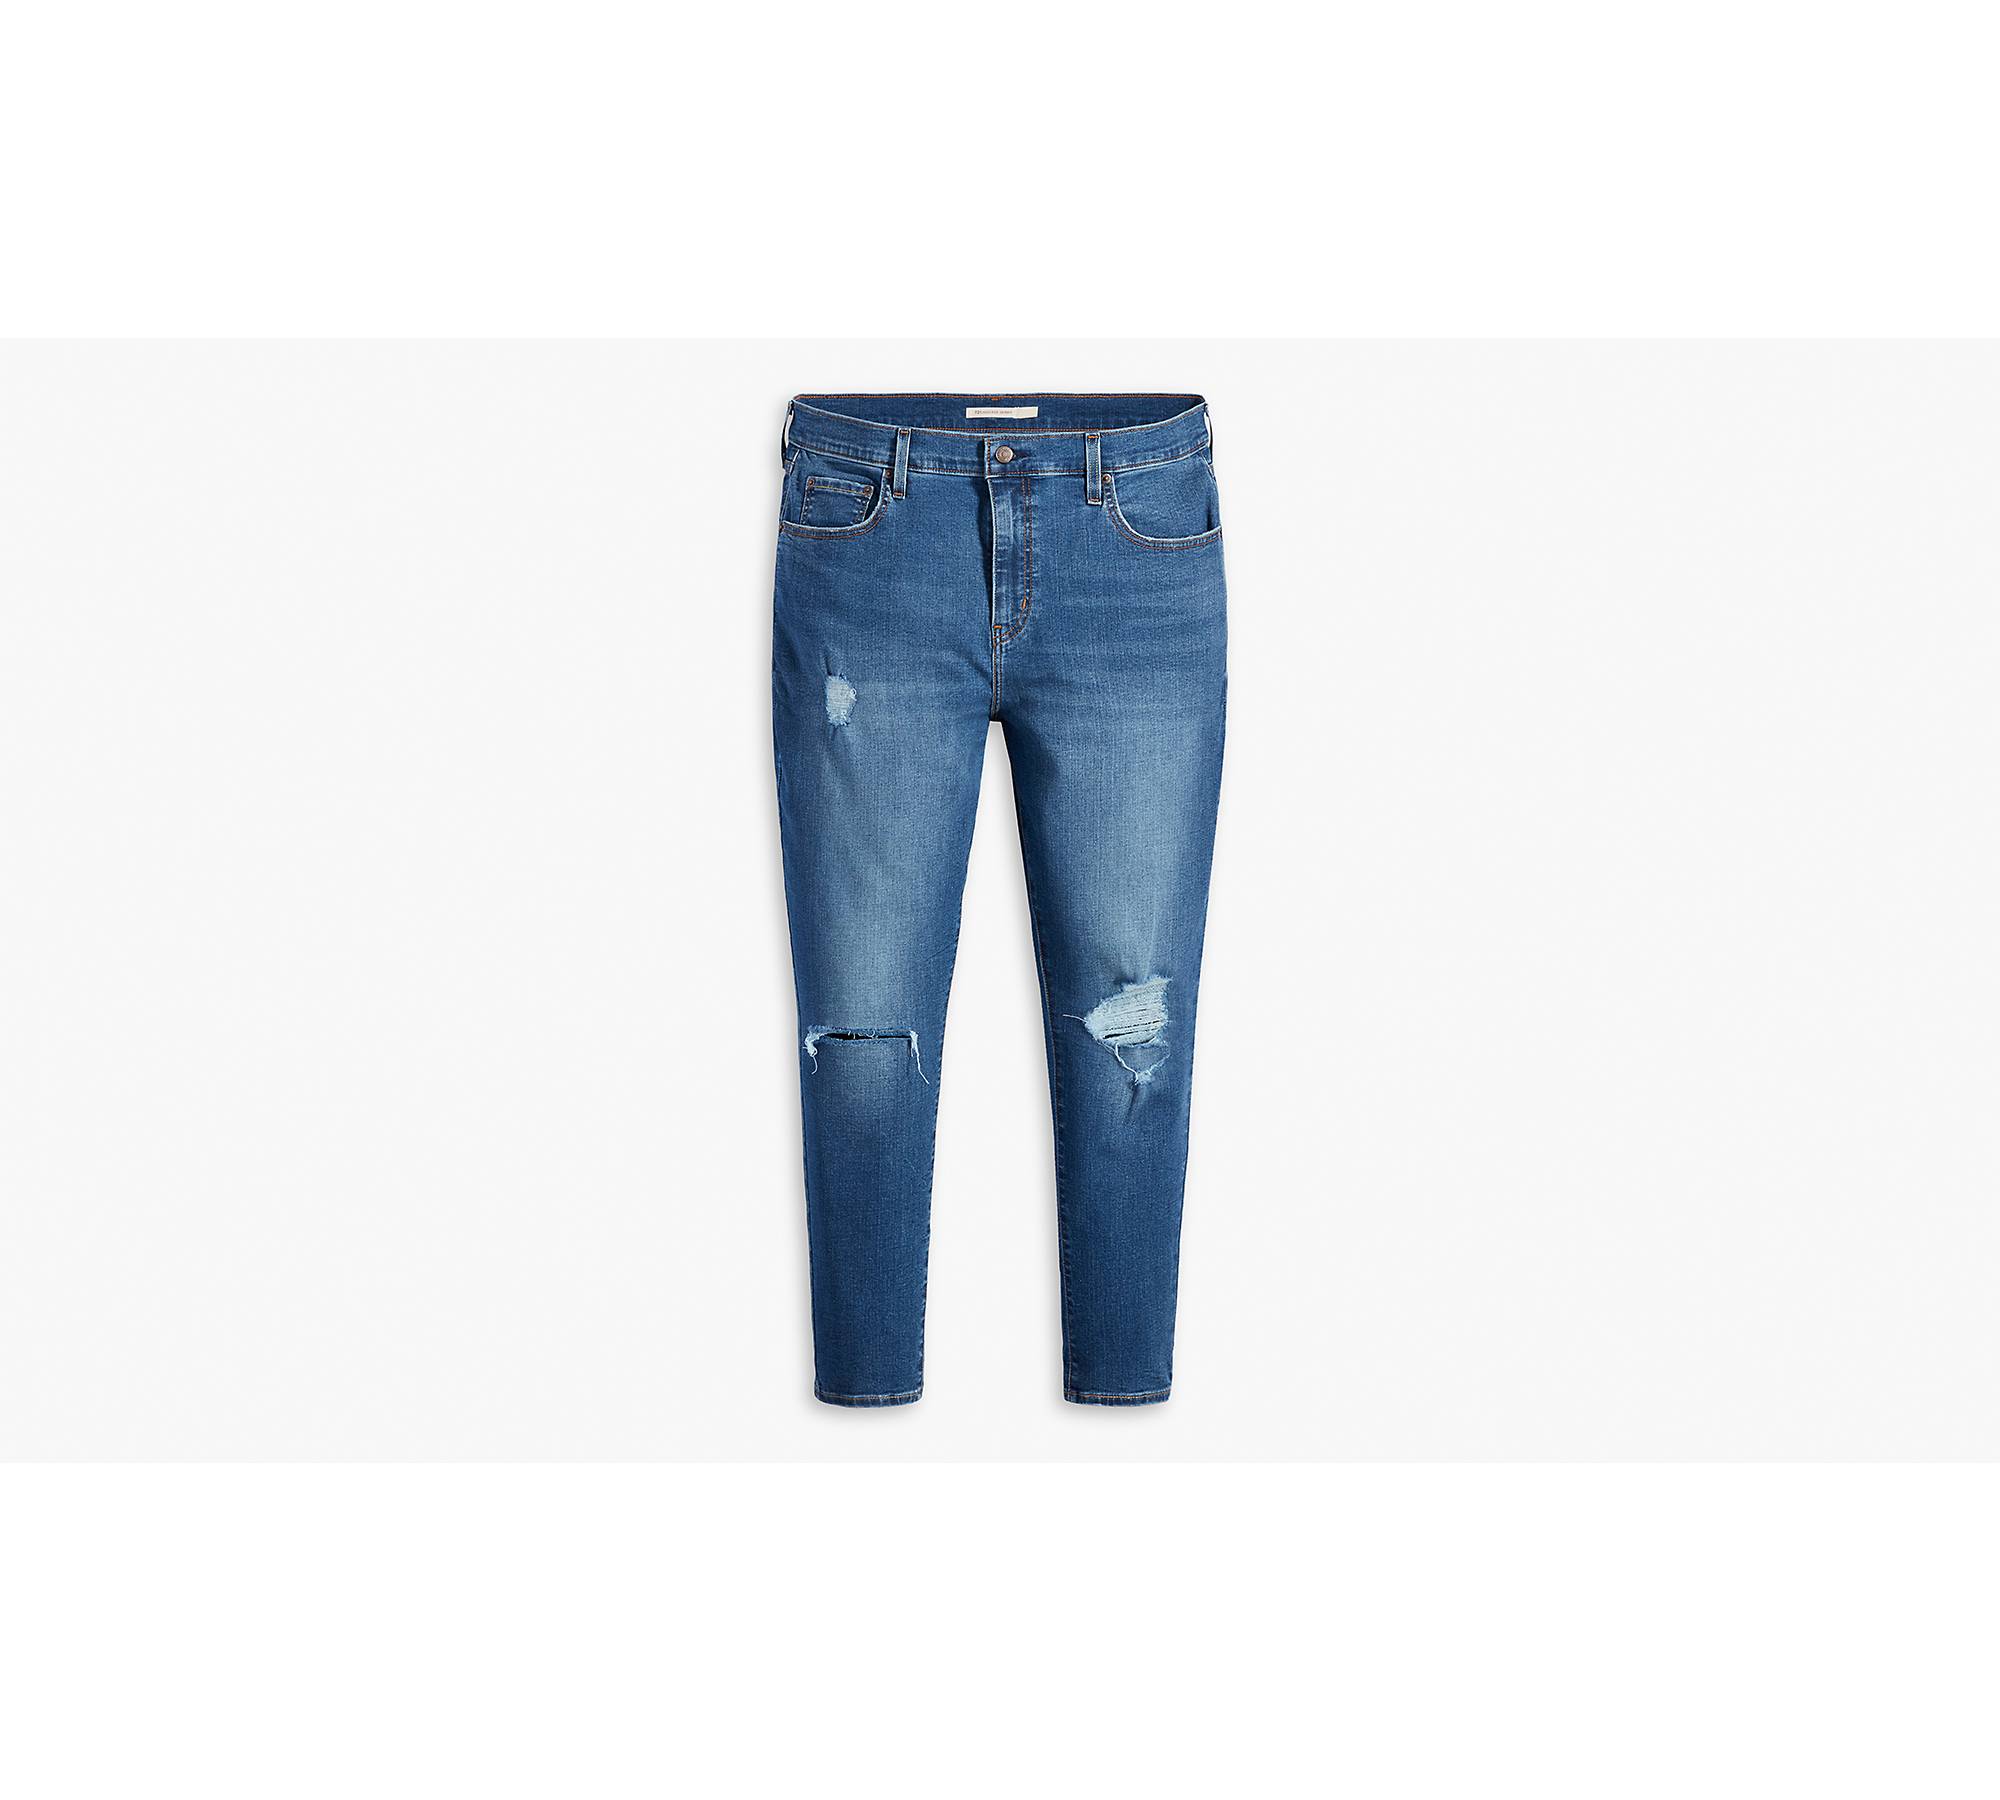 Levi's Women's 721 High-Rise Skinny Jeans in Short Length - Macy's